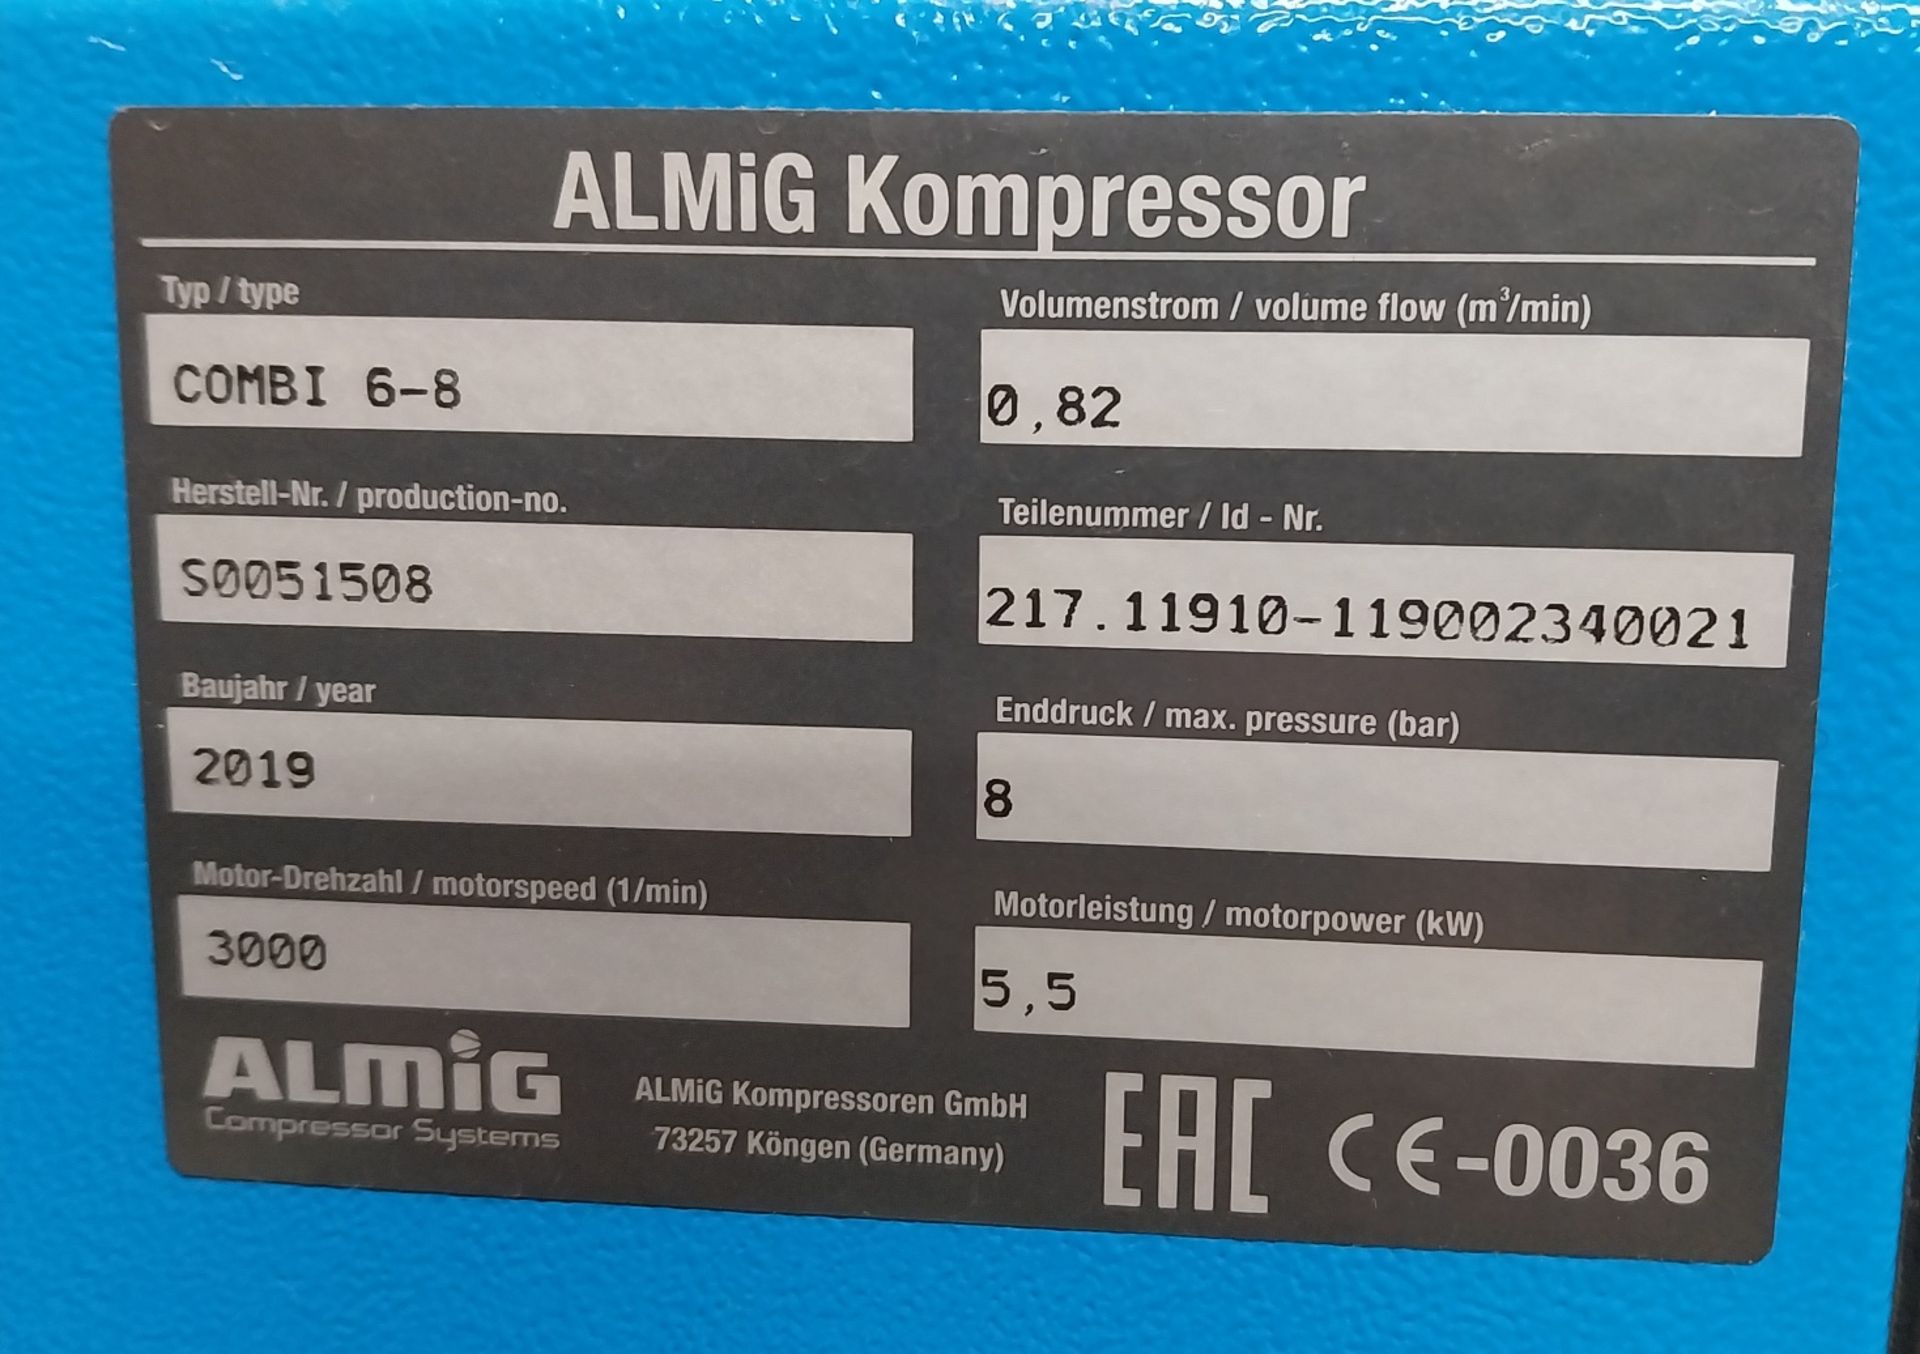 Almig Combi 6-8 Compressor Serial number 50051508 (2019) - Image 2 of 2